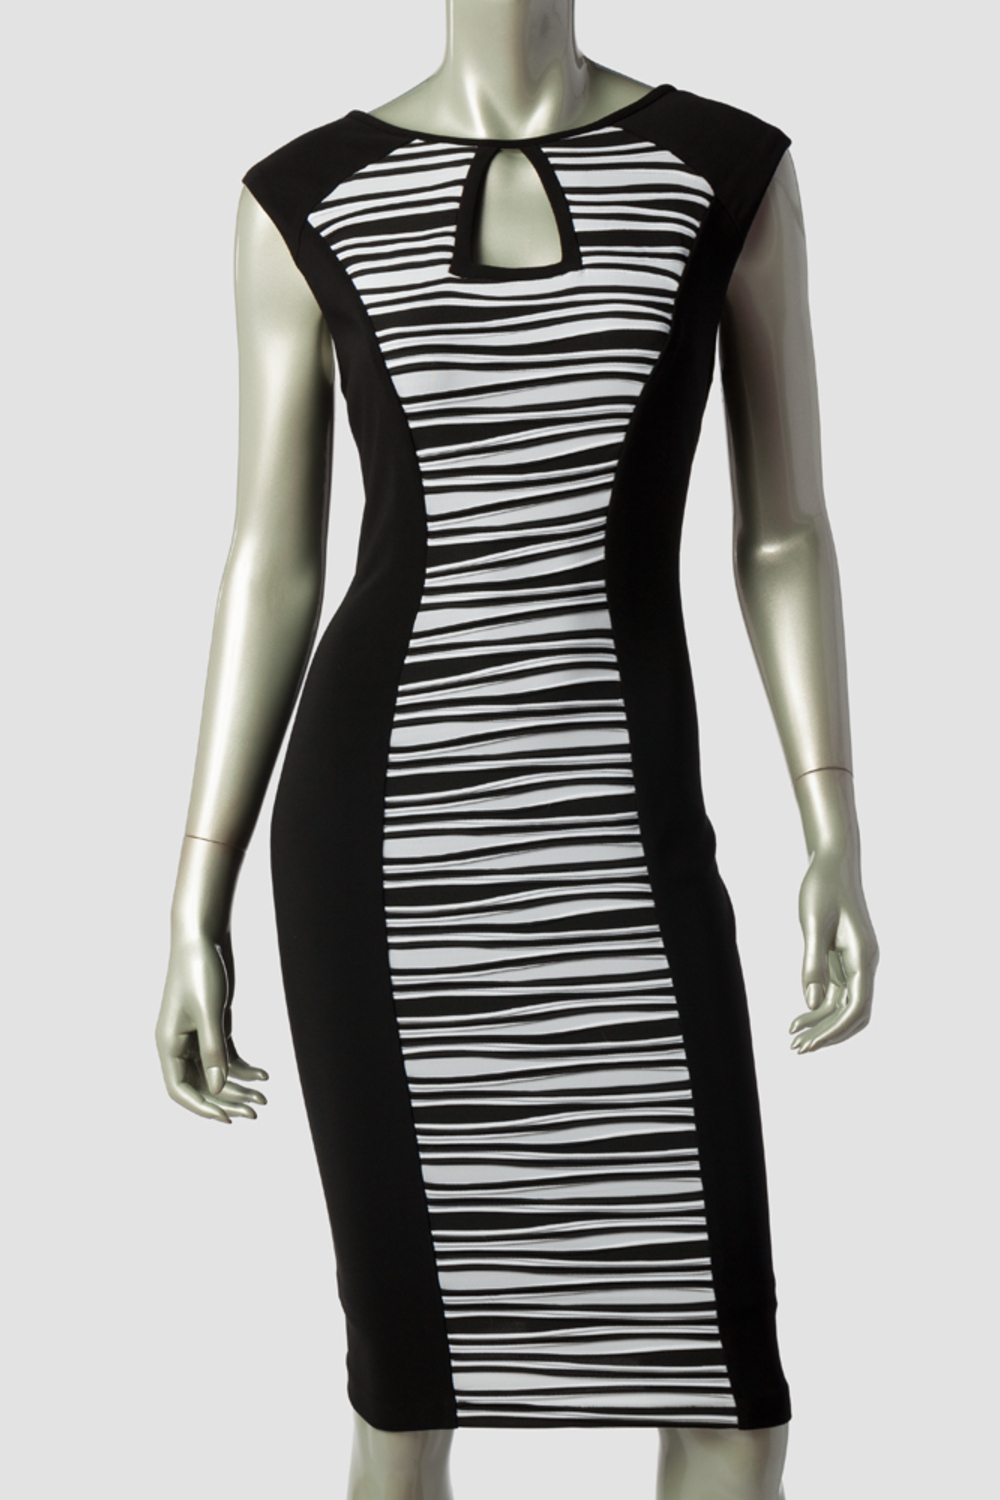 Joseph Ribkoff dress style 144936. Black/white